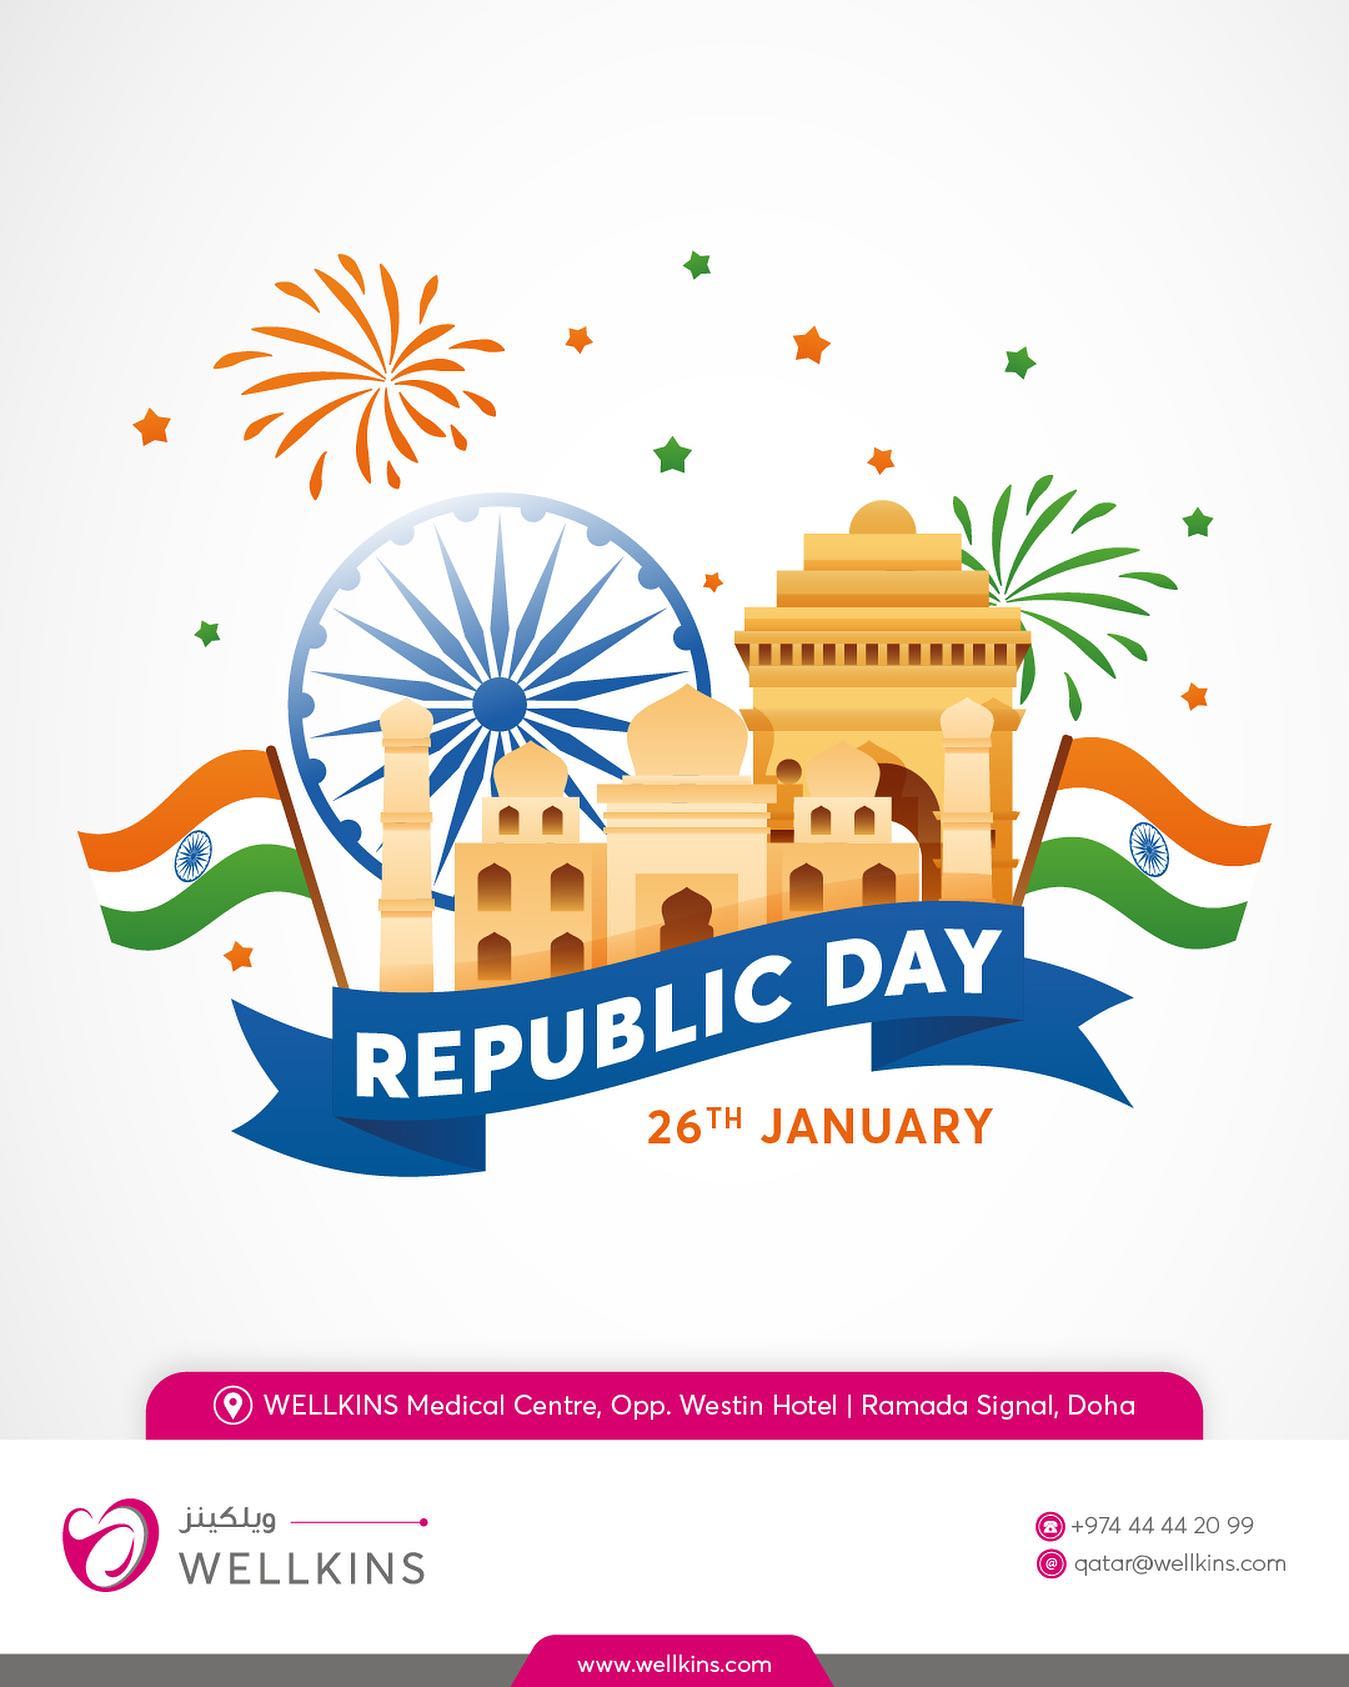 Happy Republic Day 🇮🇳